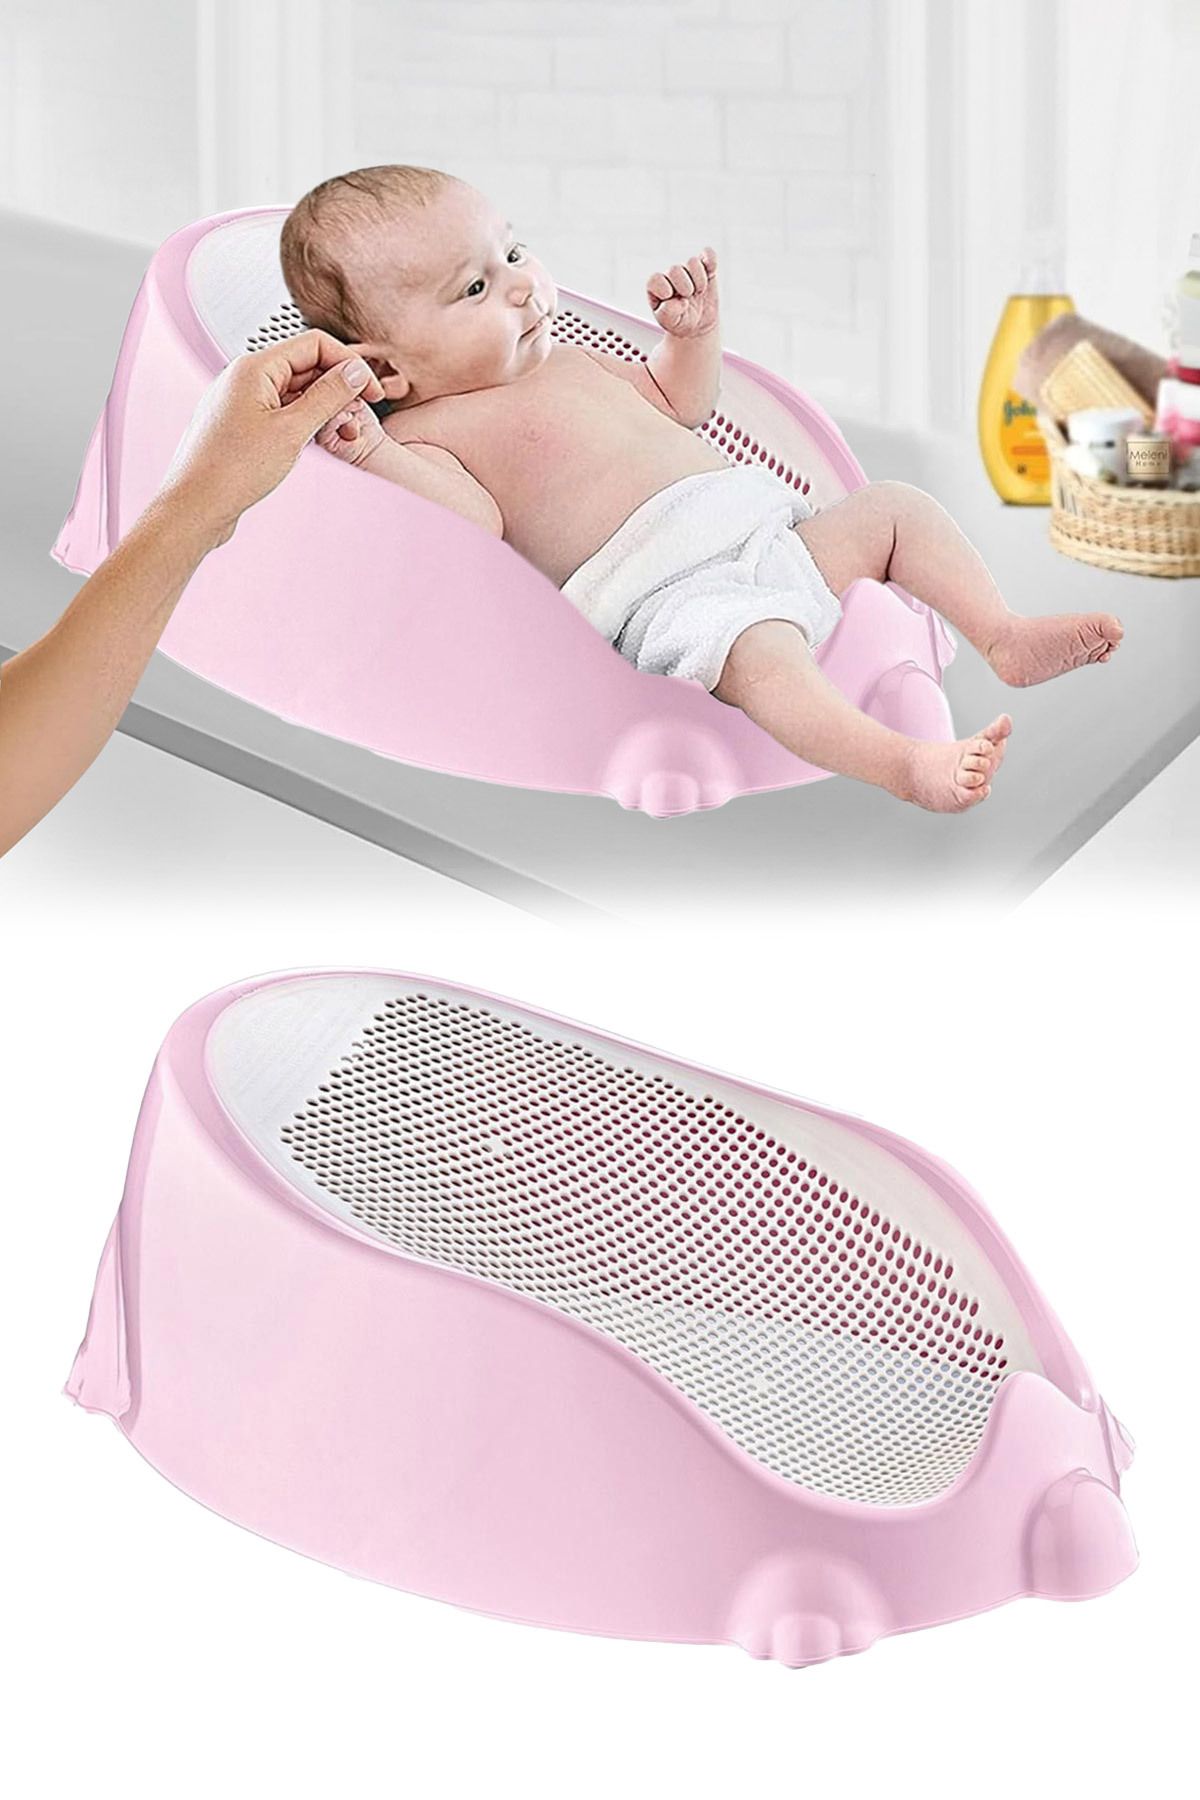 Pikas Soft Bebek Küveti , Silikon Fileli Besleme Yıkama Banyo Küveti Bebek Oturağı Pembe +Banyo Kesesi